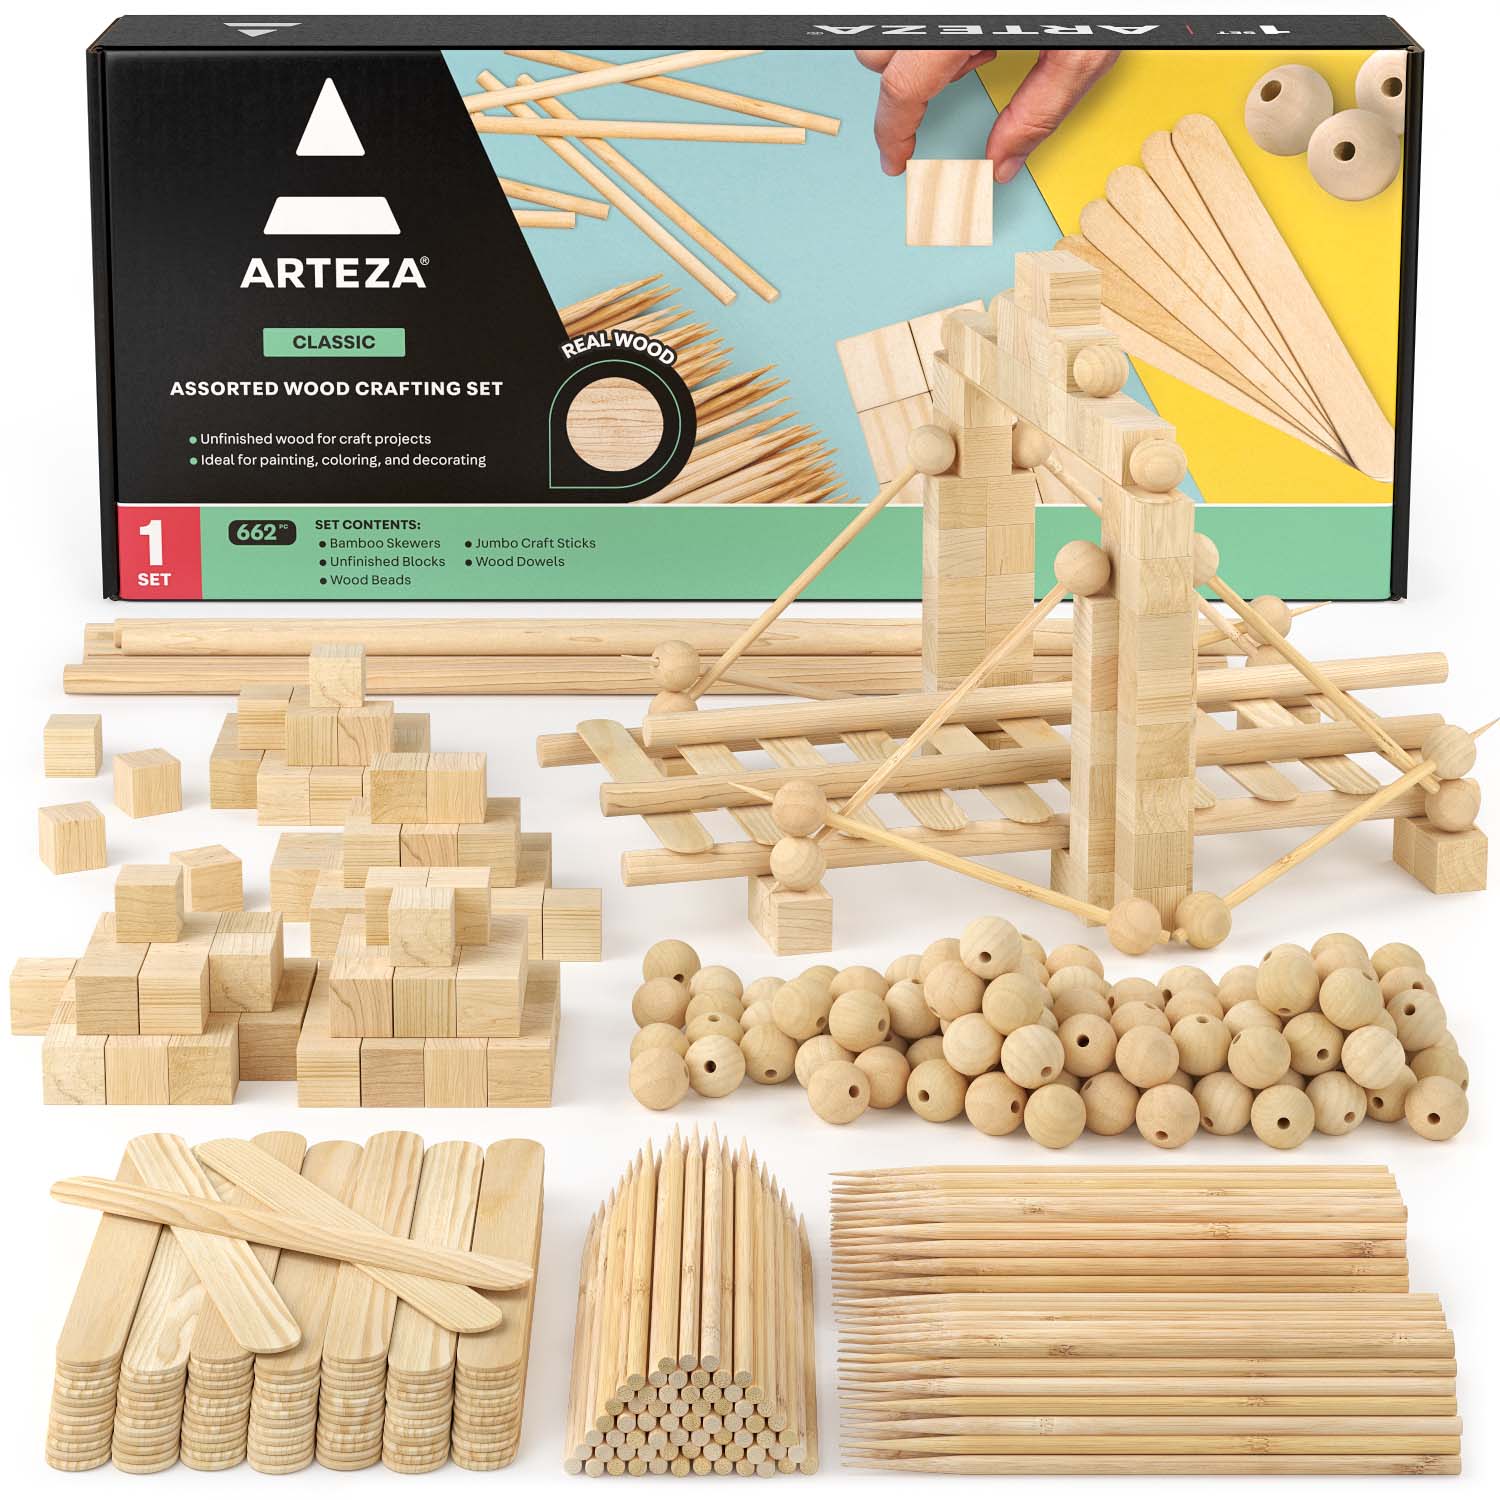 Arteza Assorted Wood Crafting Kit